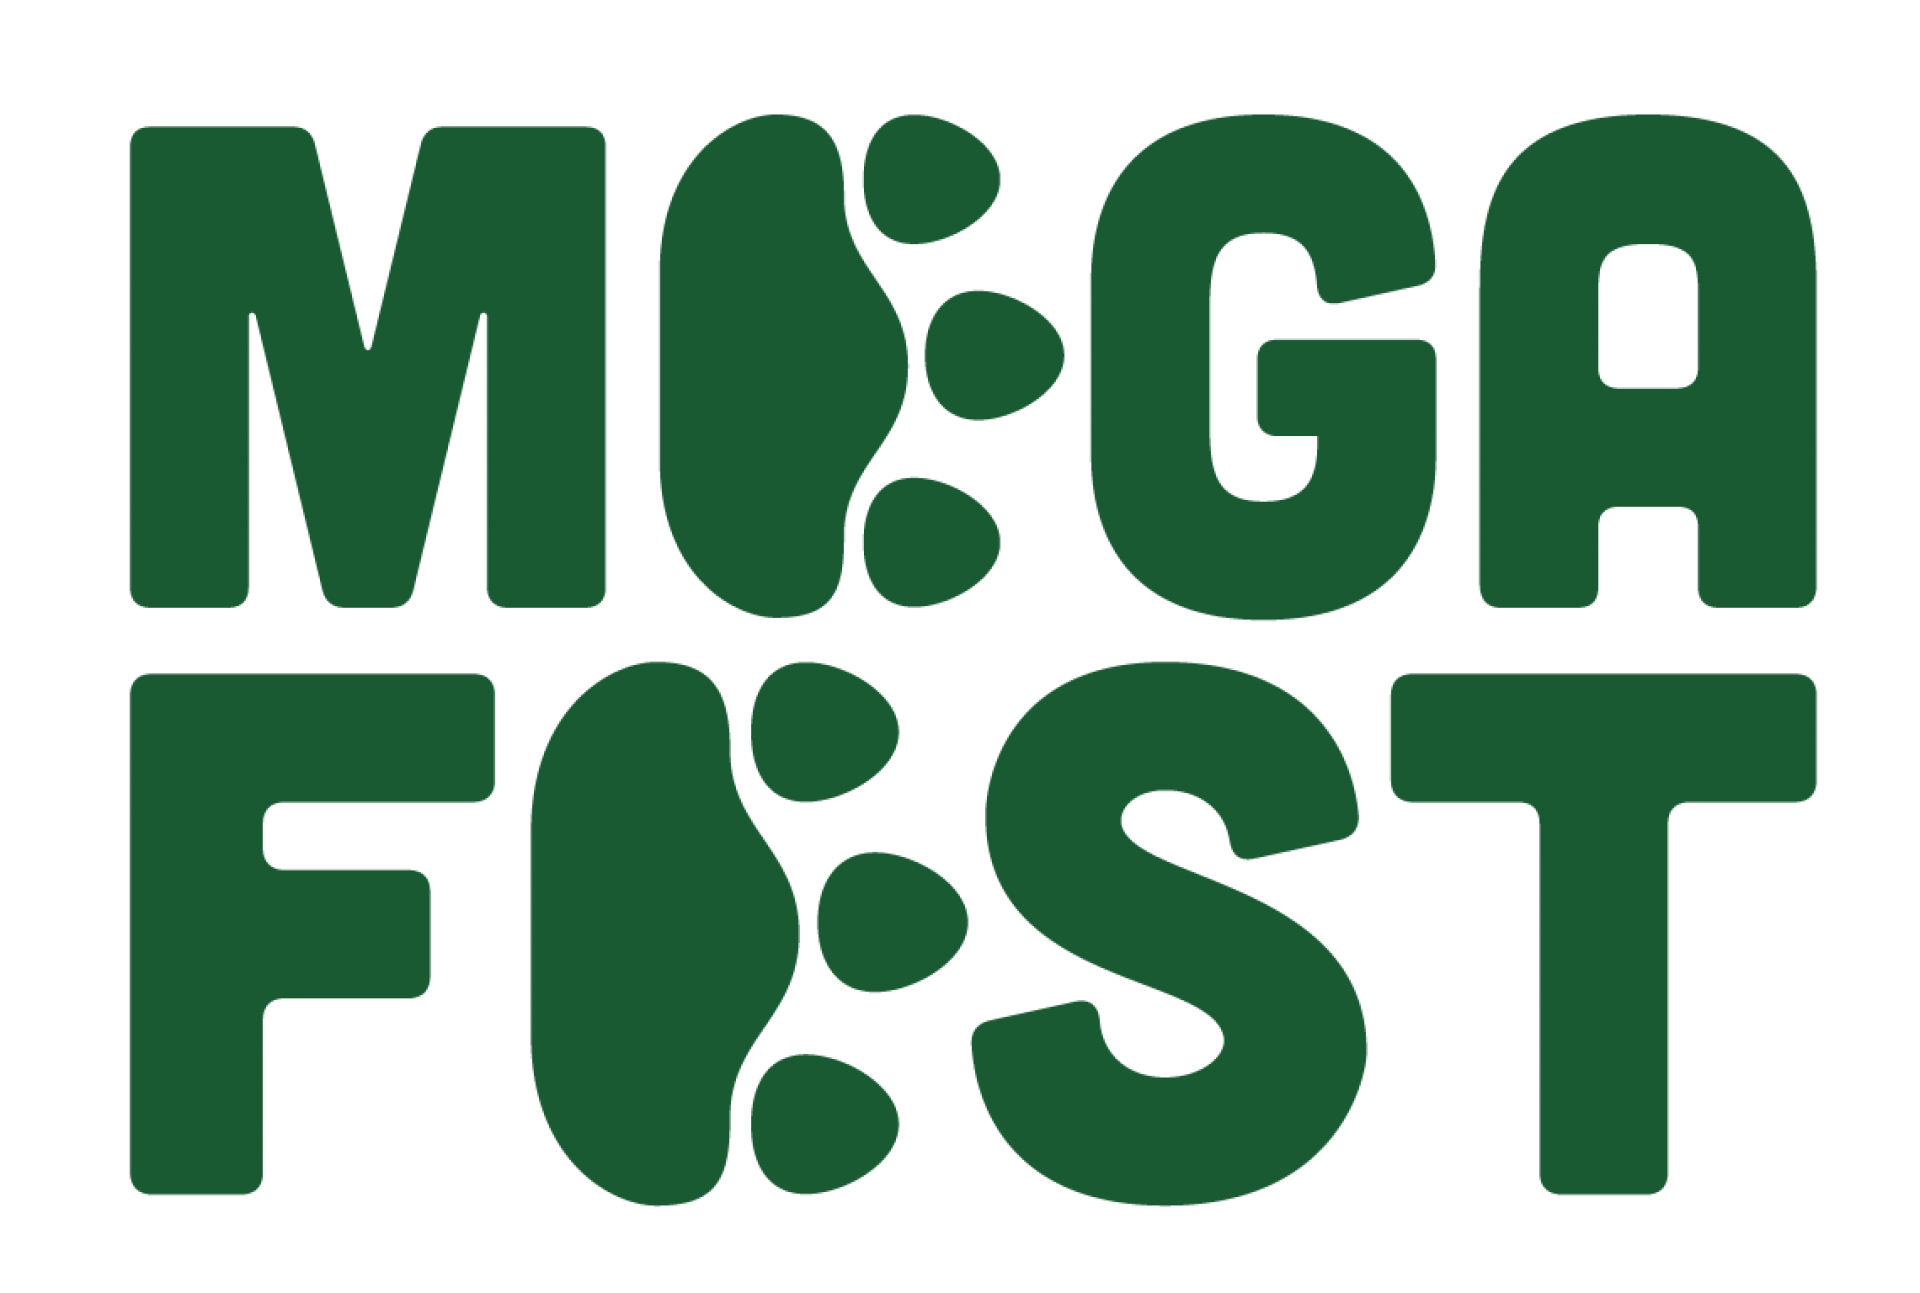 MegaFest logo